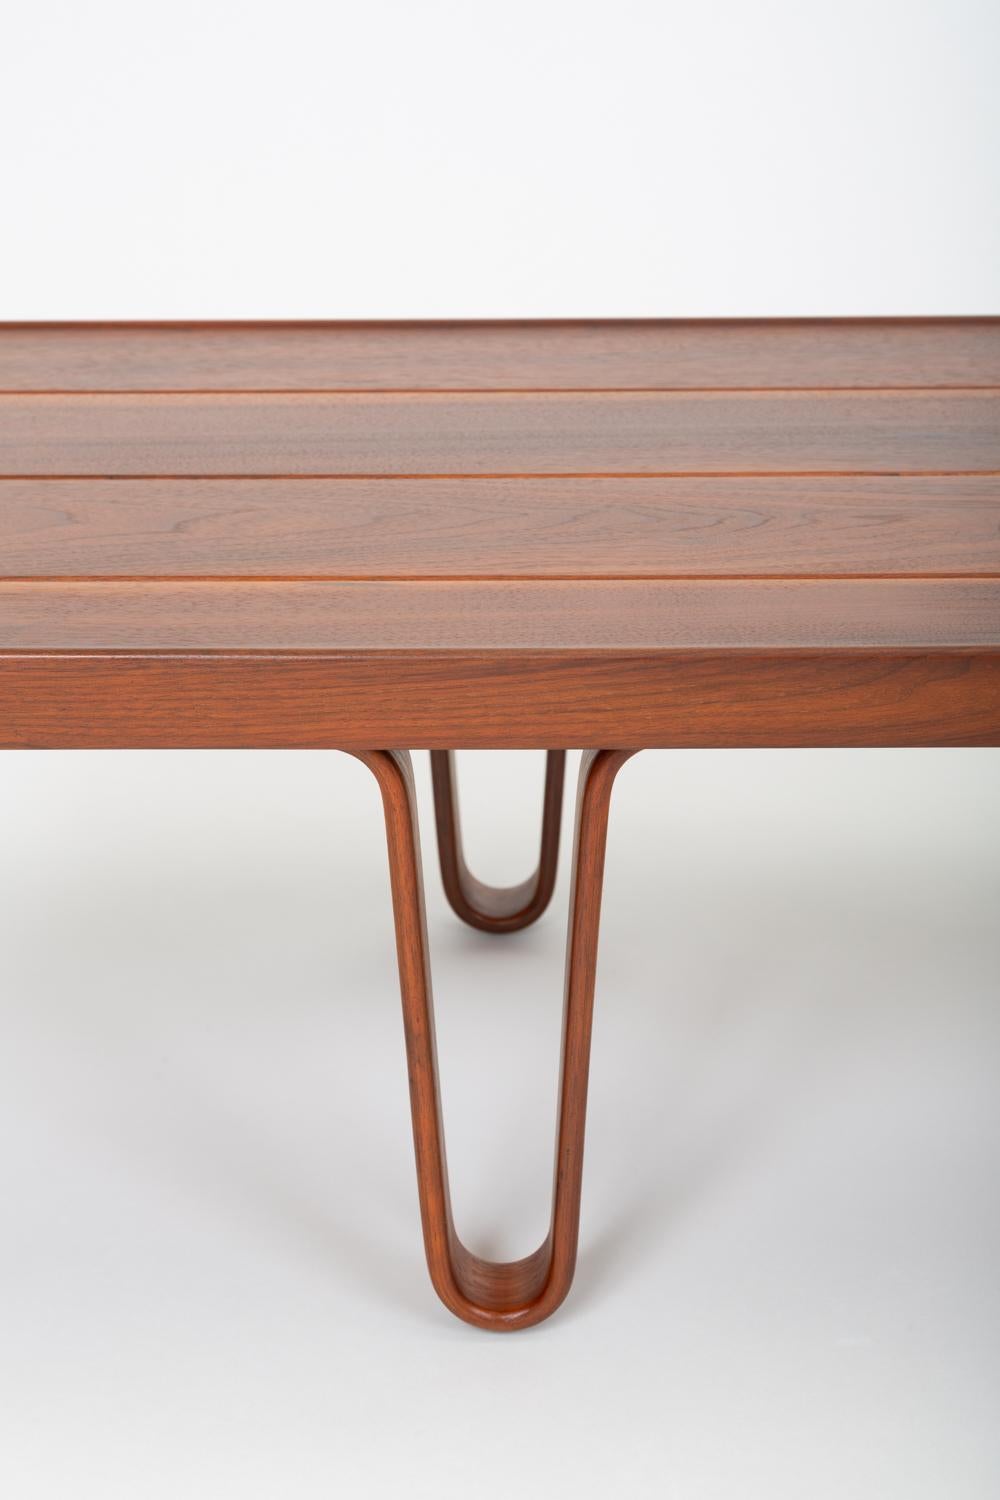 Walnut “Long John” Bench or Coffee Table by Edward Wormley for Dunbar 7